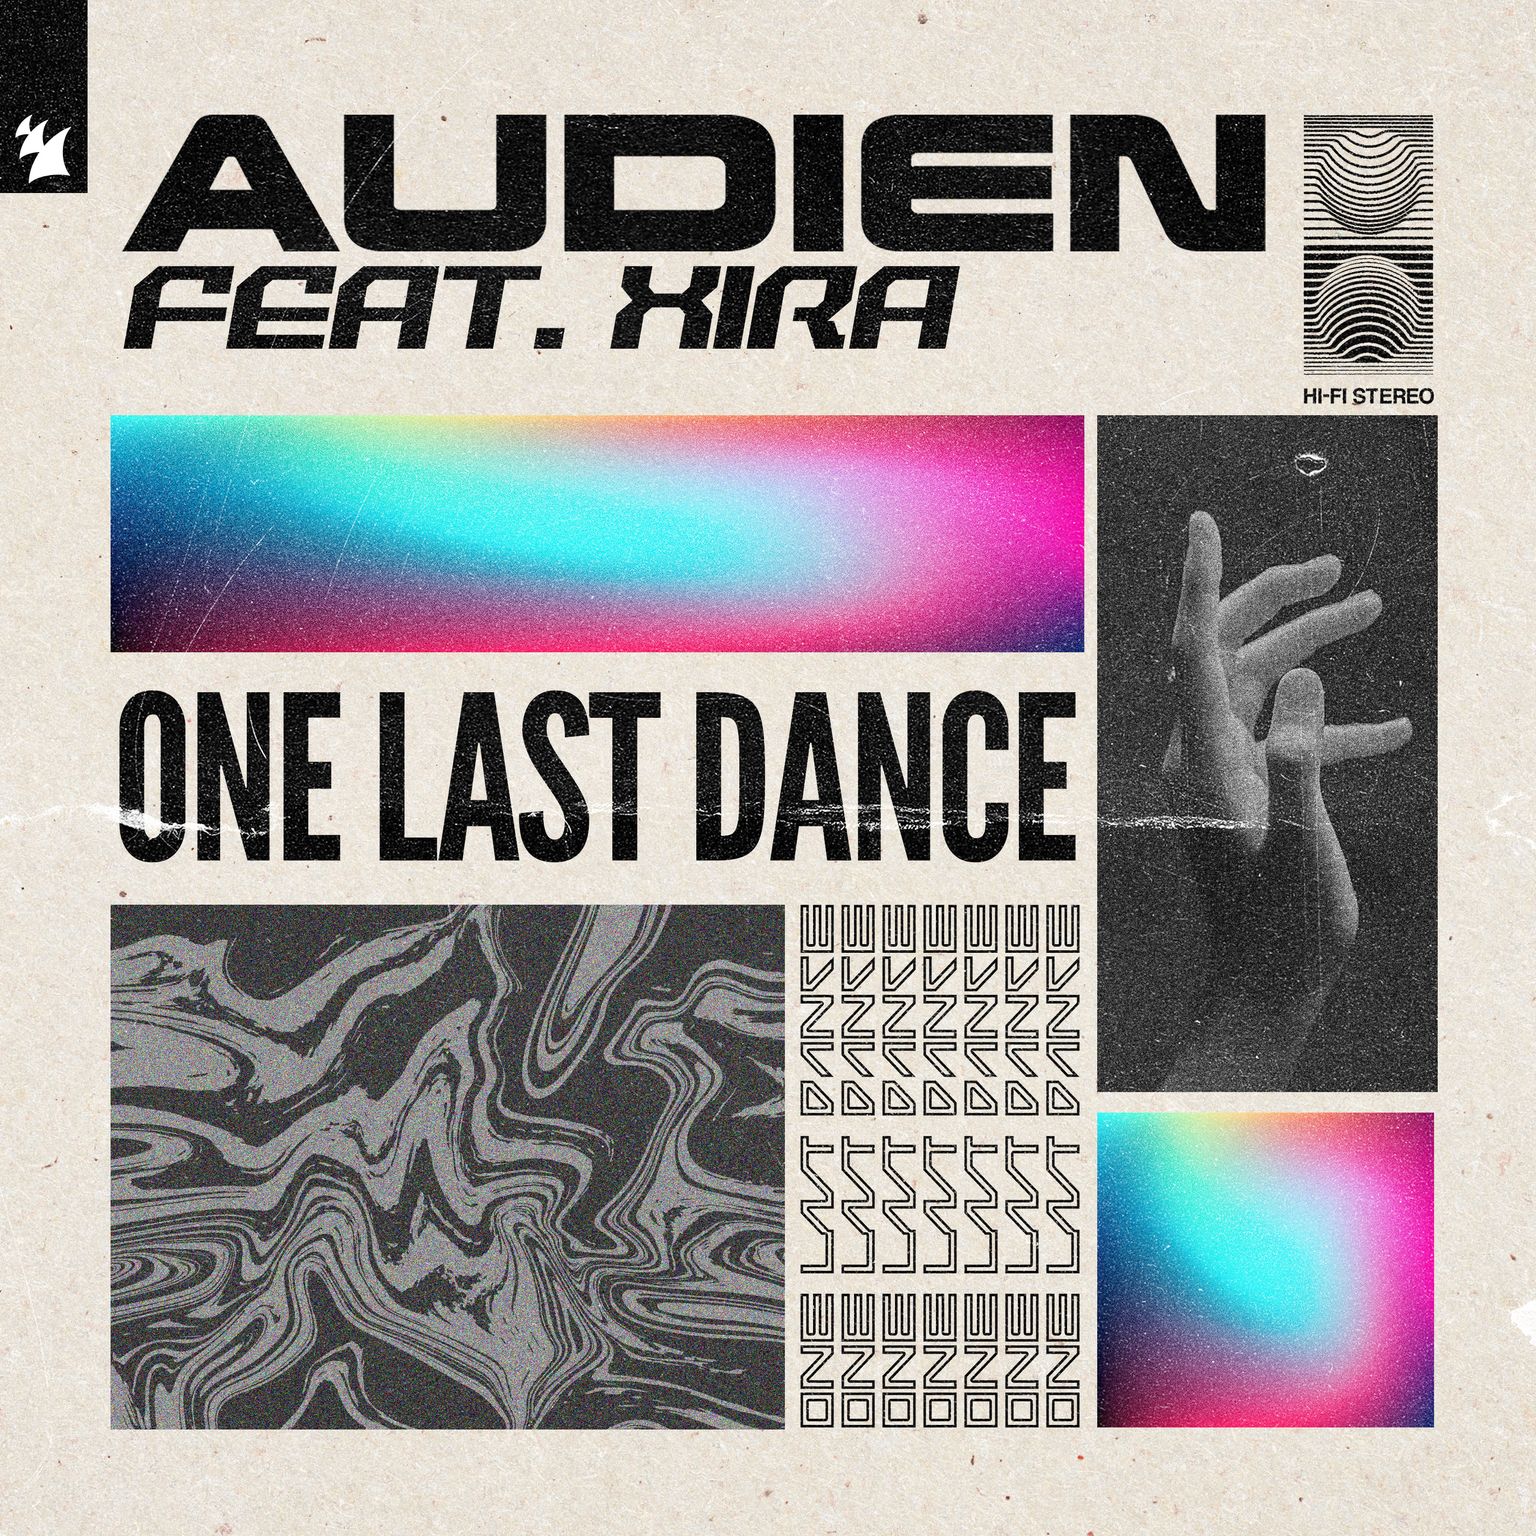 Audien feat. XIRA presents One Last Dance on Armada Music